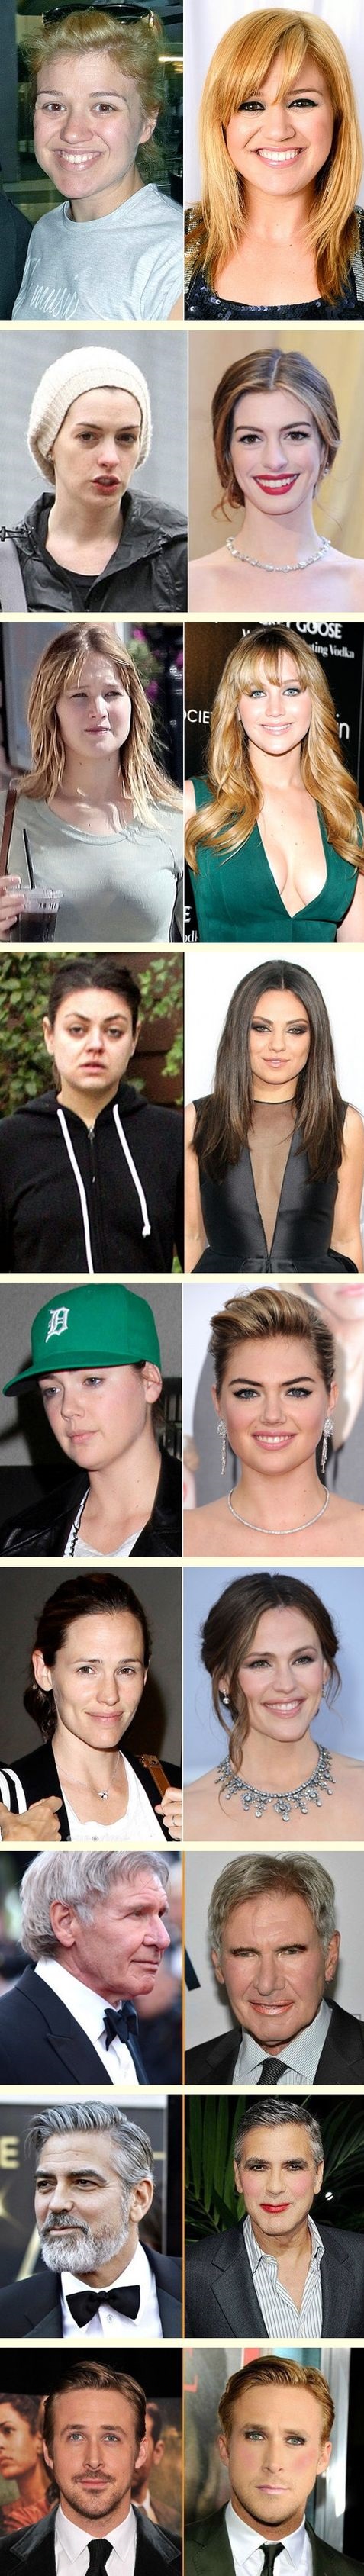 celebs-makeup-before-after